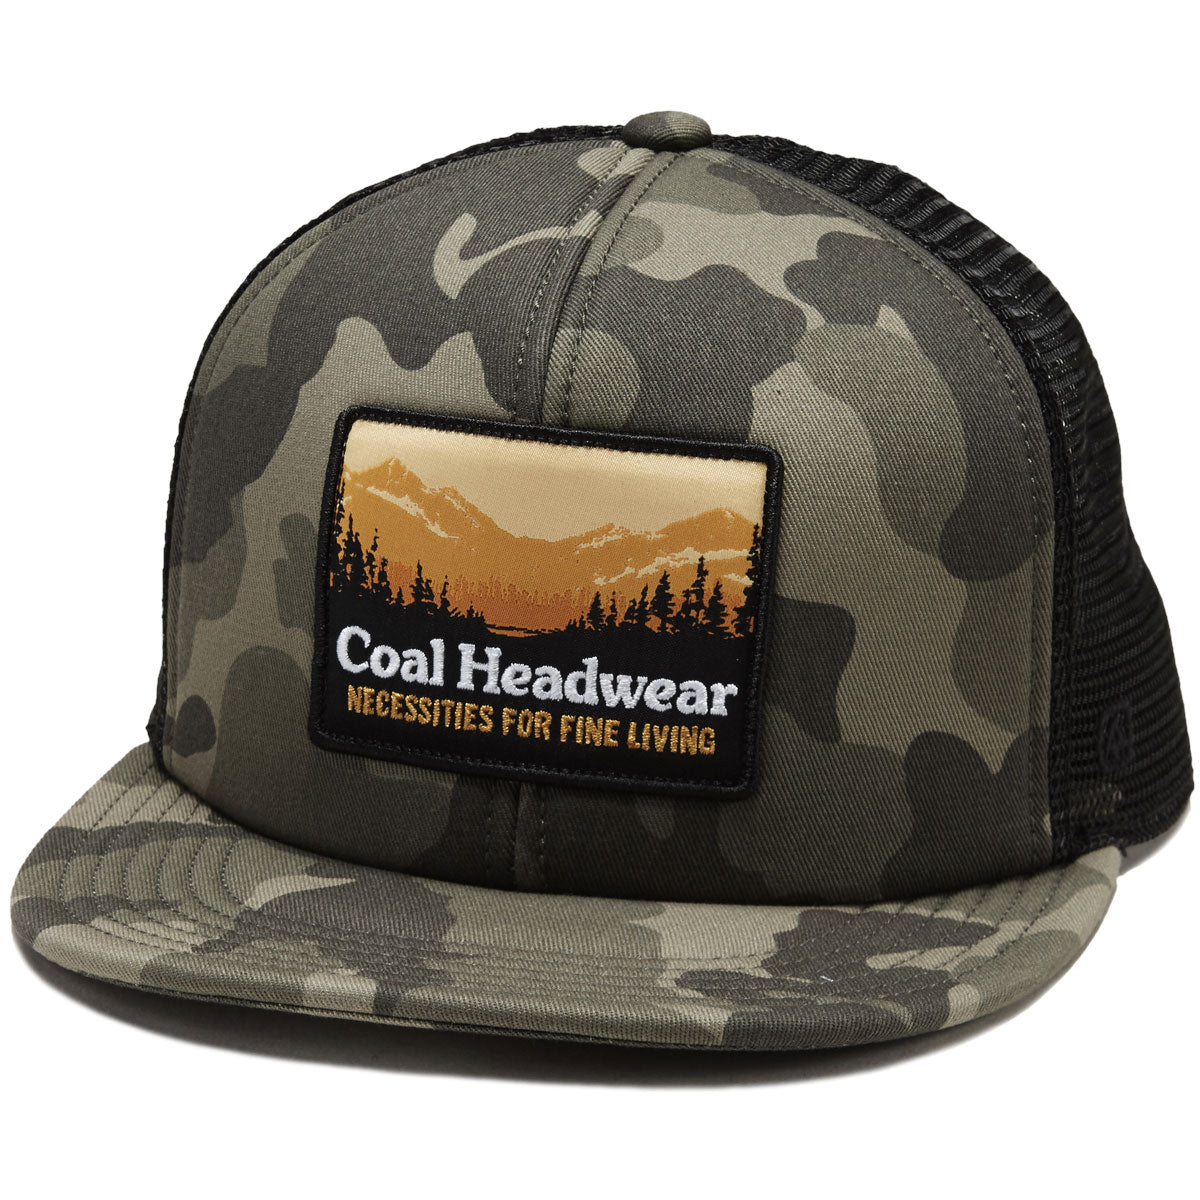 Coal Hauler Hat - Camo image 1